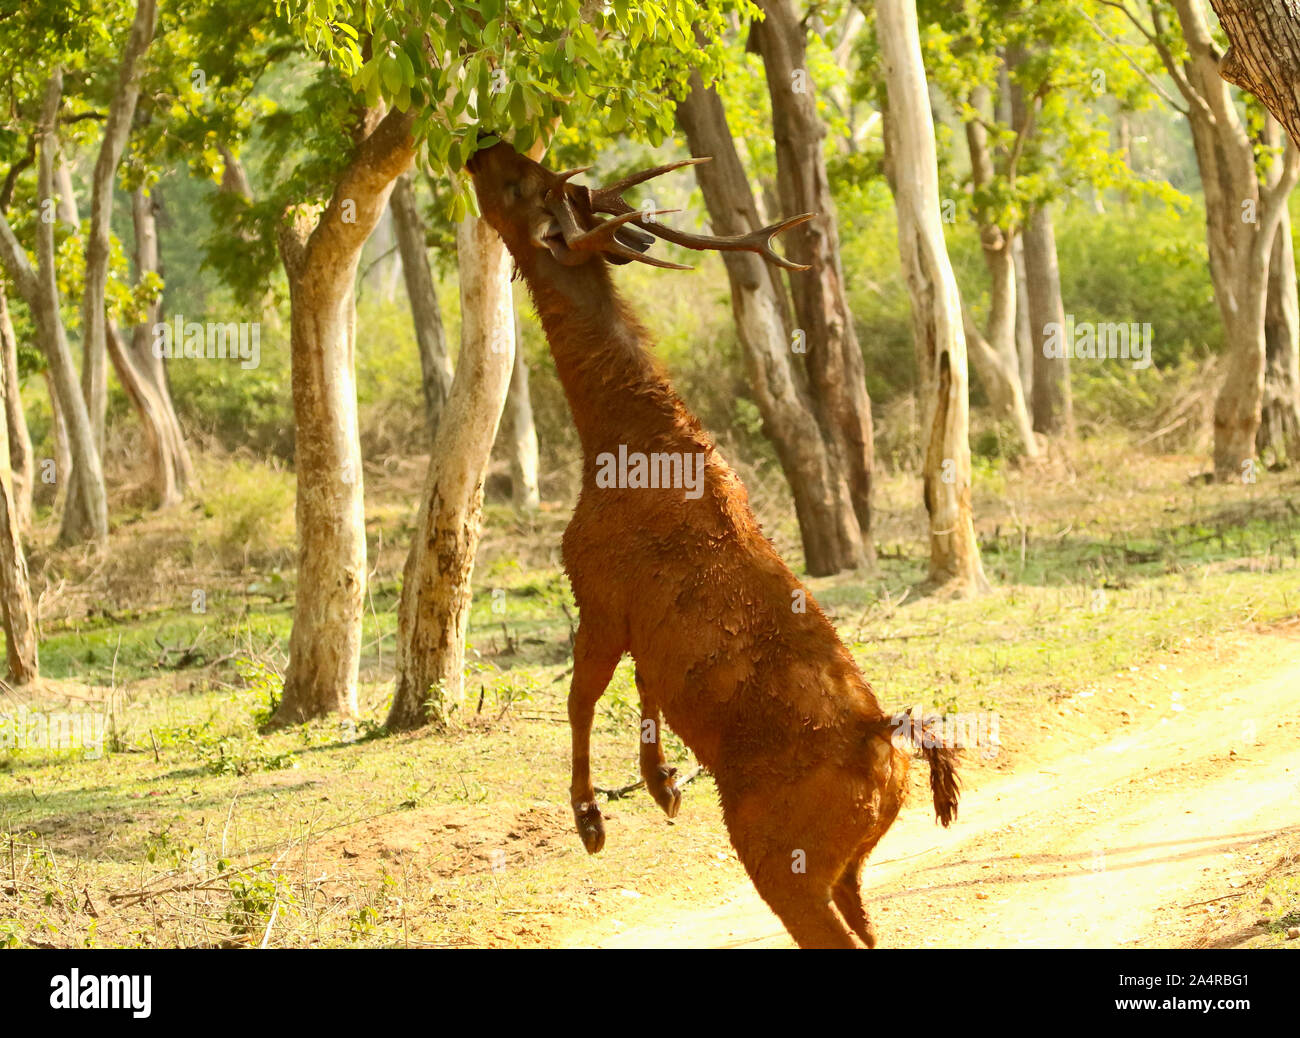 Cerfs Sambhar, Rusa unicolor au Parc National de Nagarhole à Karnataka, en Inde Banque D'Images